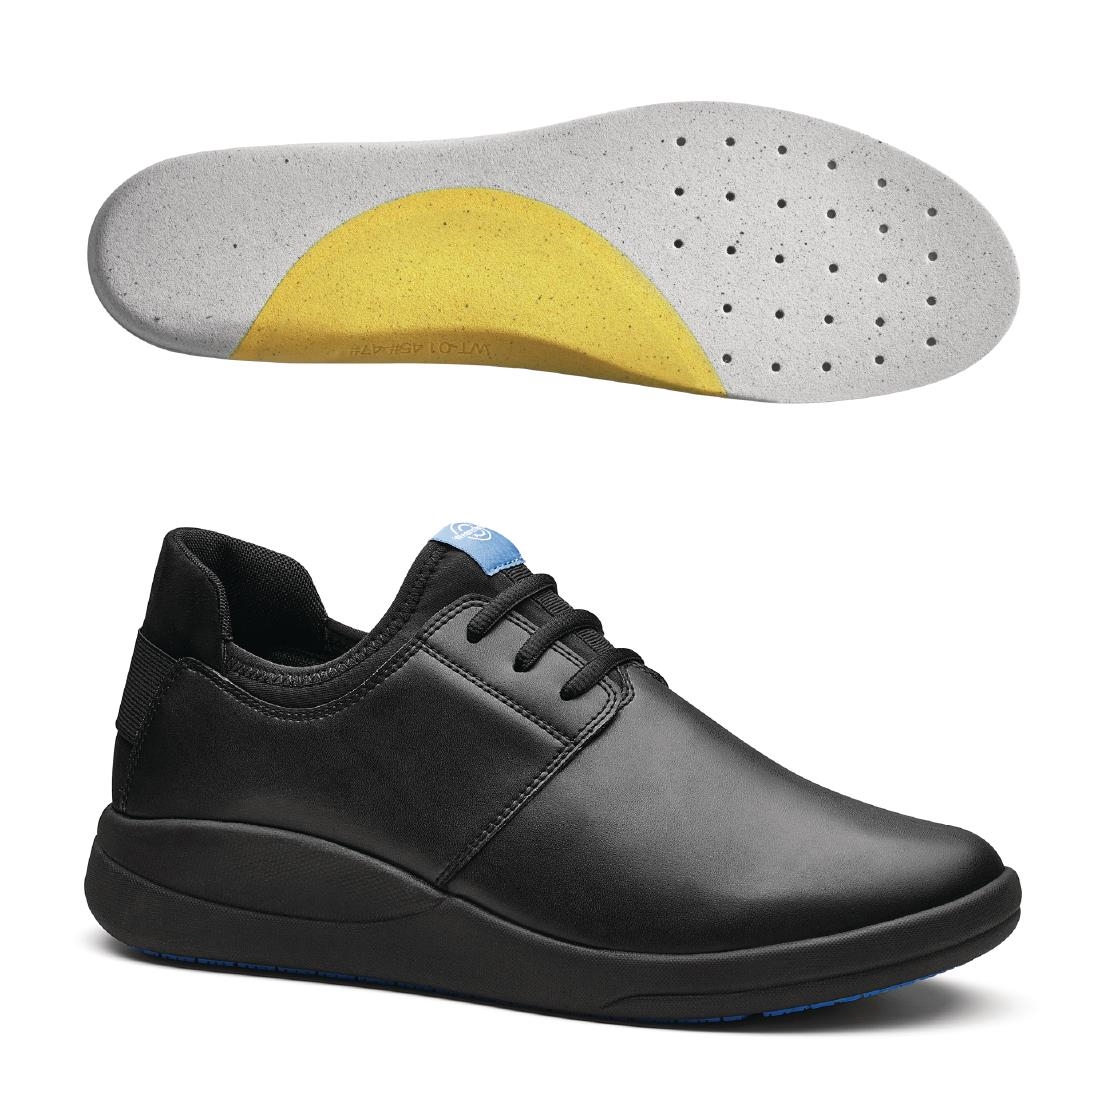 WearerTech Relieve Shoe Black with Soft Insoles Size 43